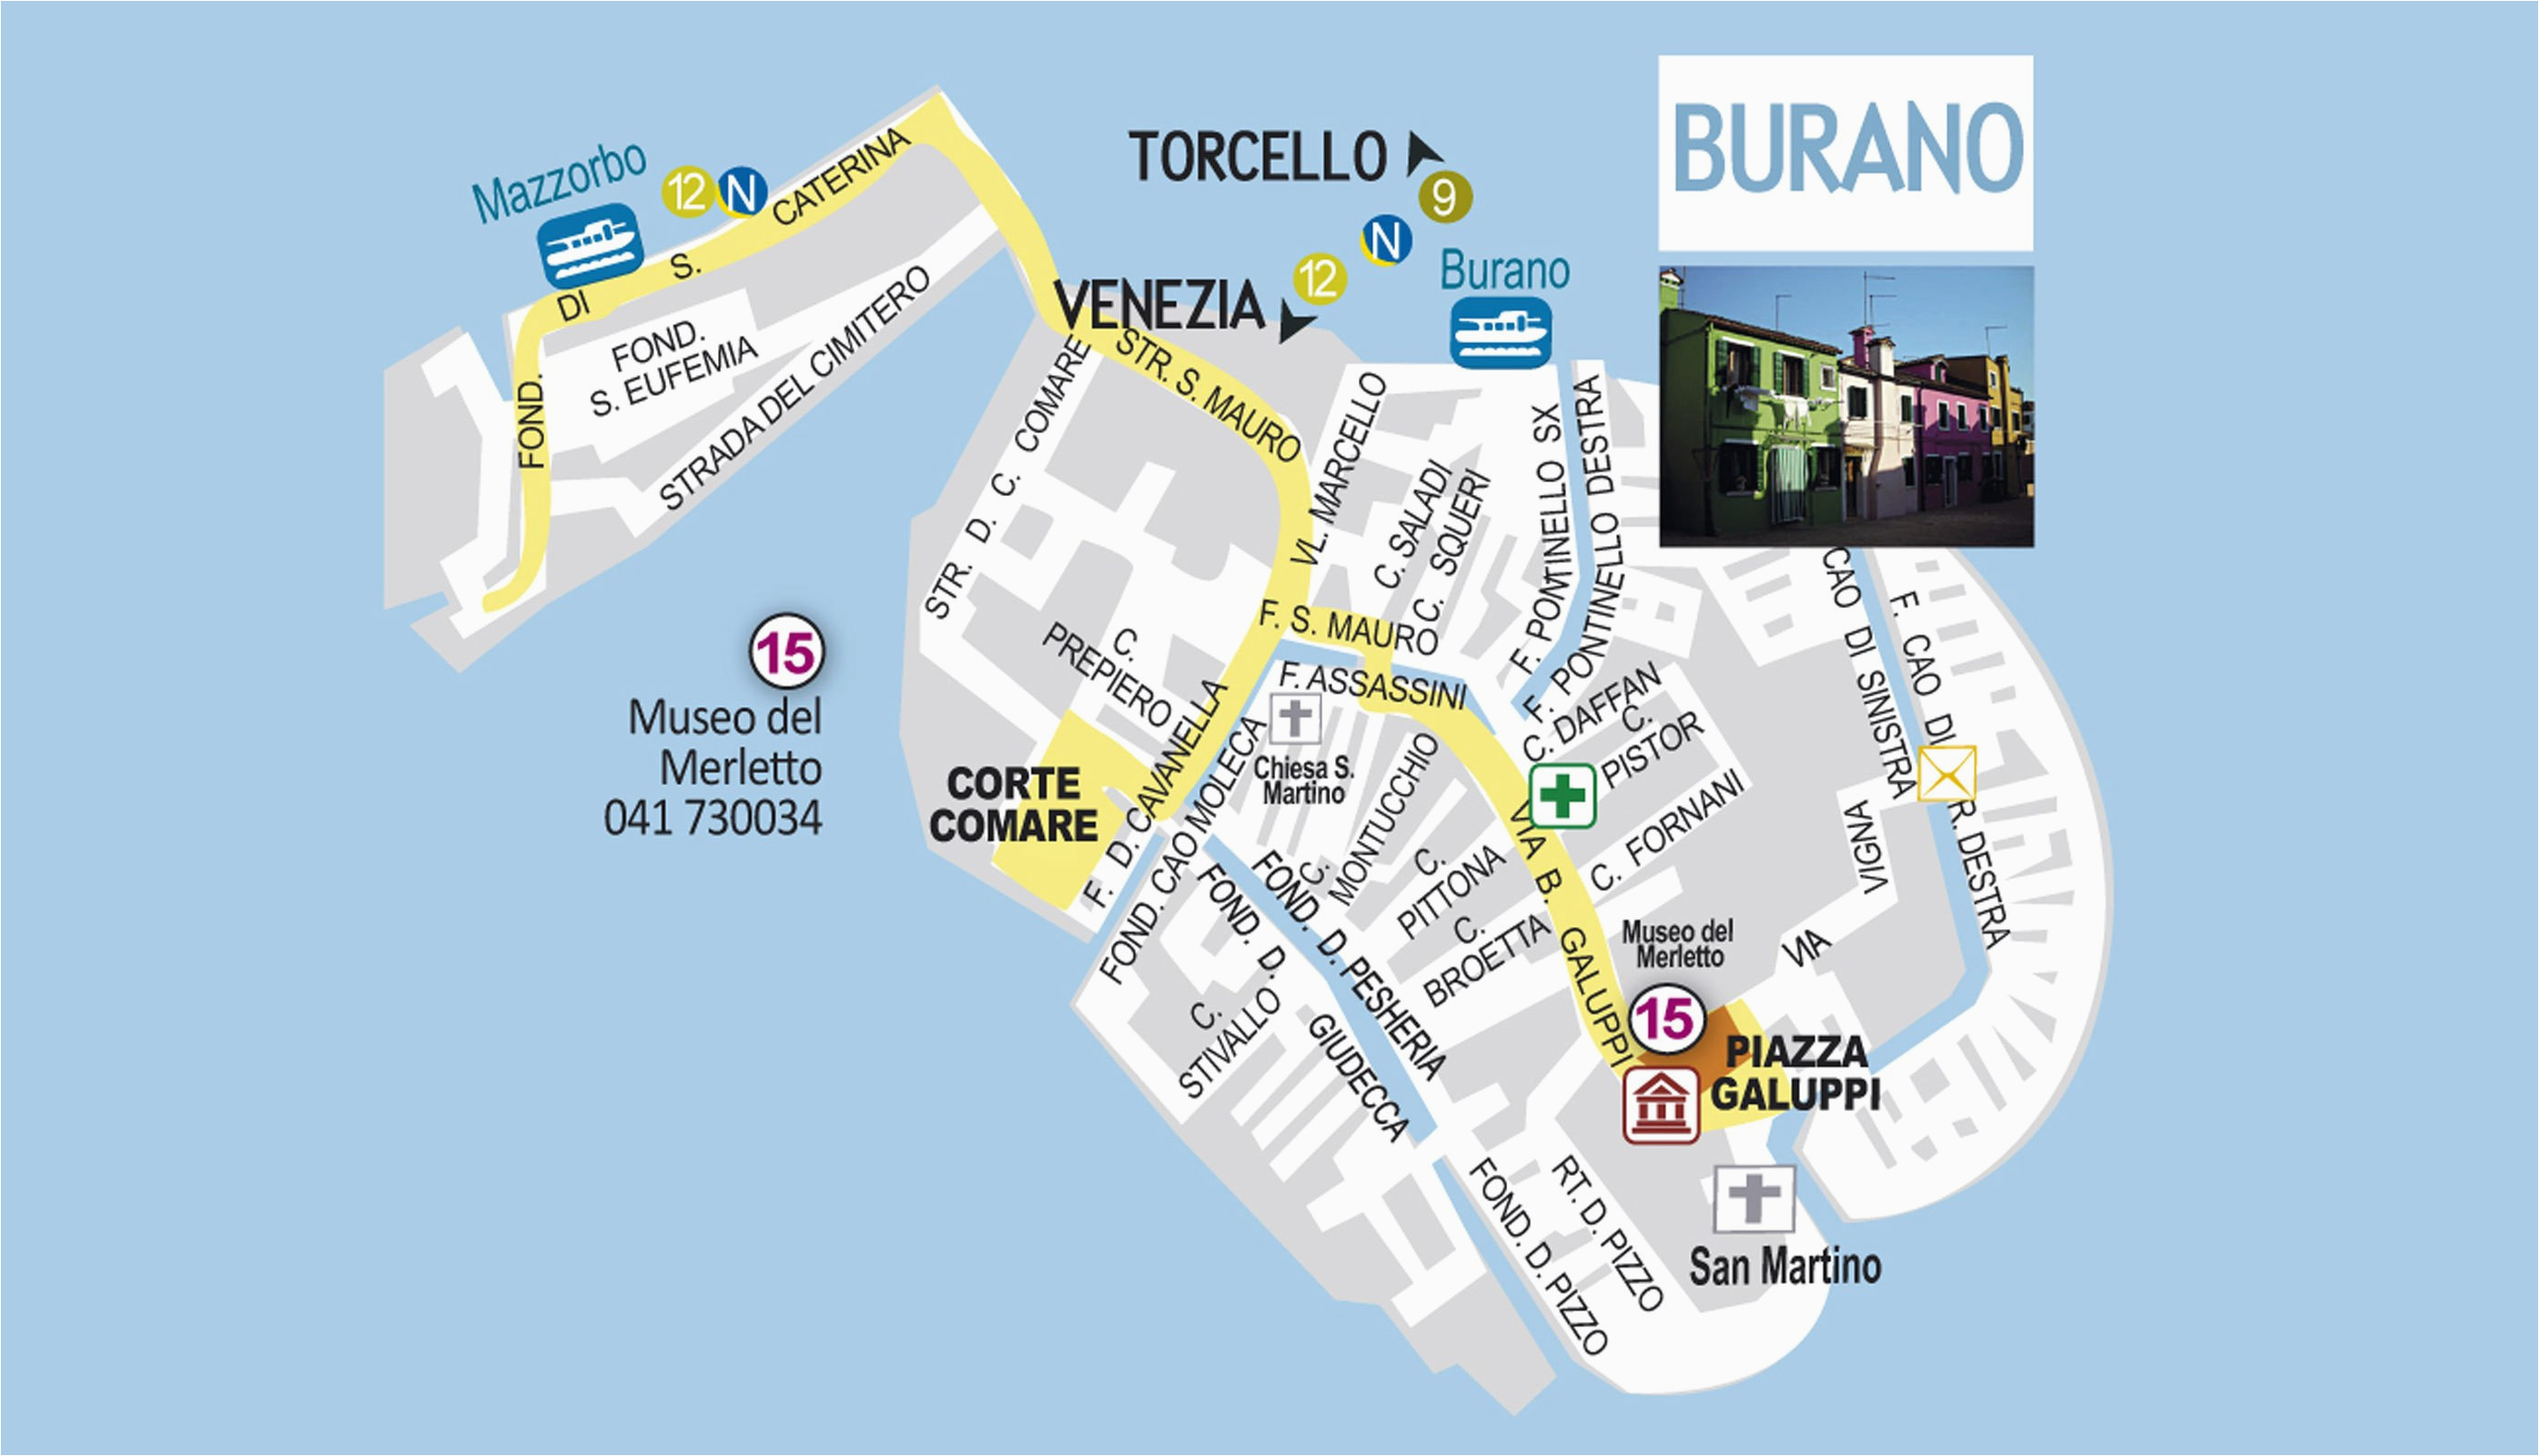 Burano Italy Map Burano Map World Wanderista Epic Map Of Venice Beach California